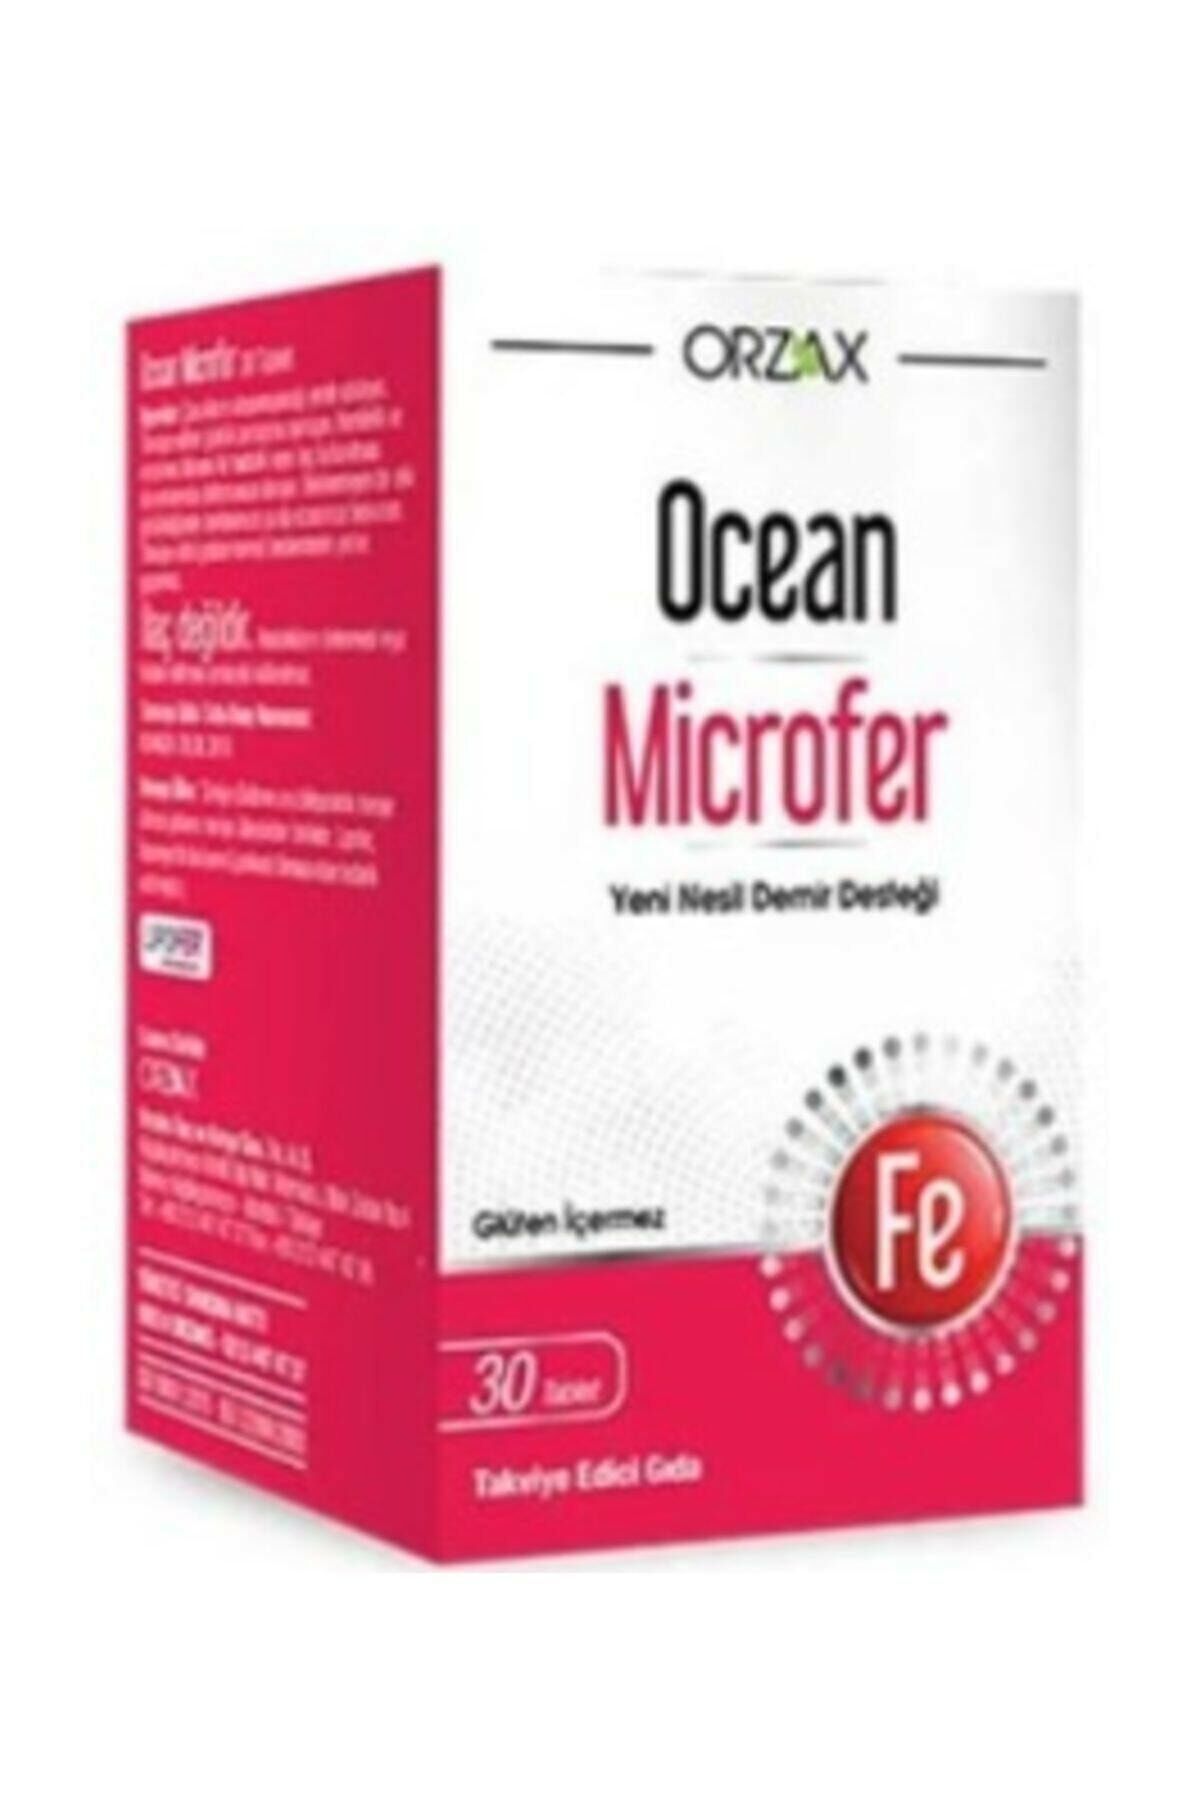 Orzax Ocean Microfer 30 Tablet